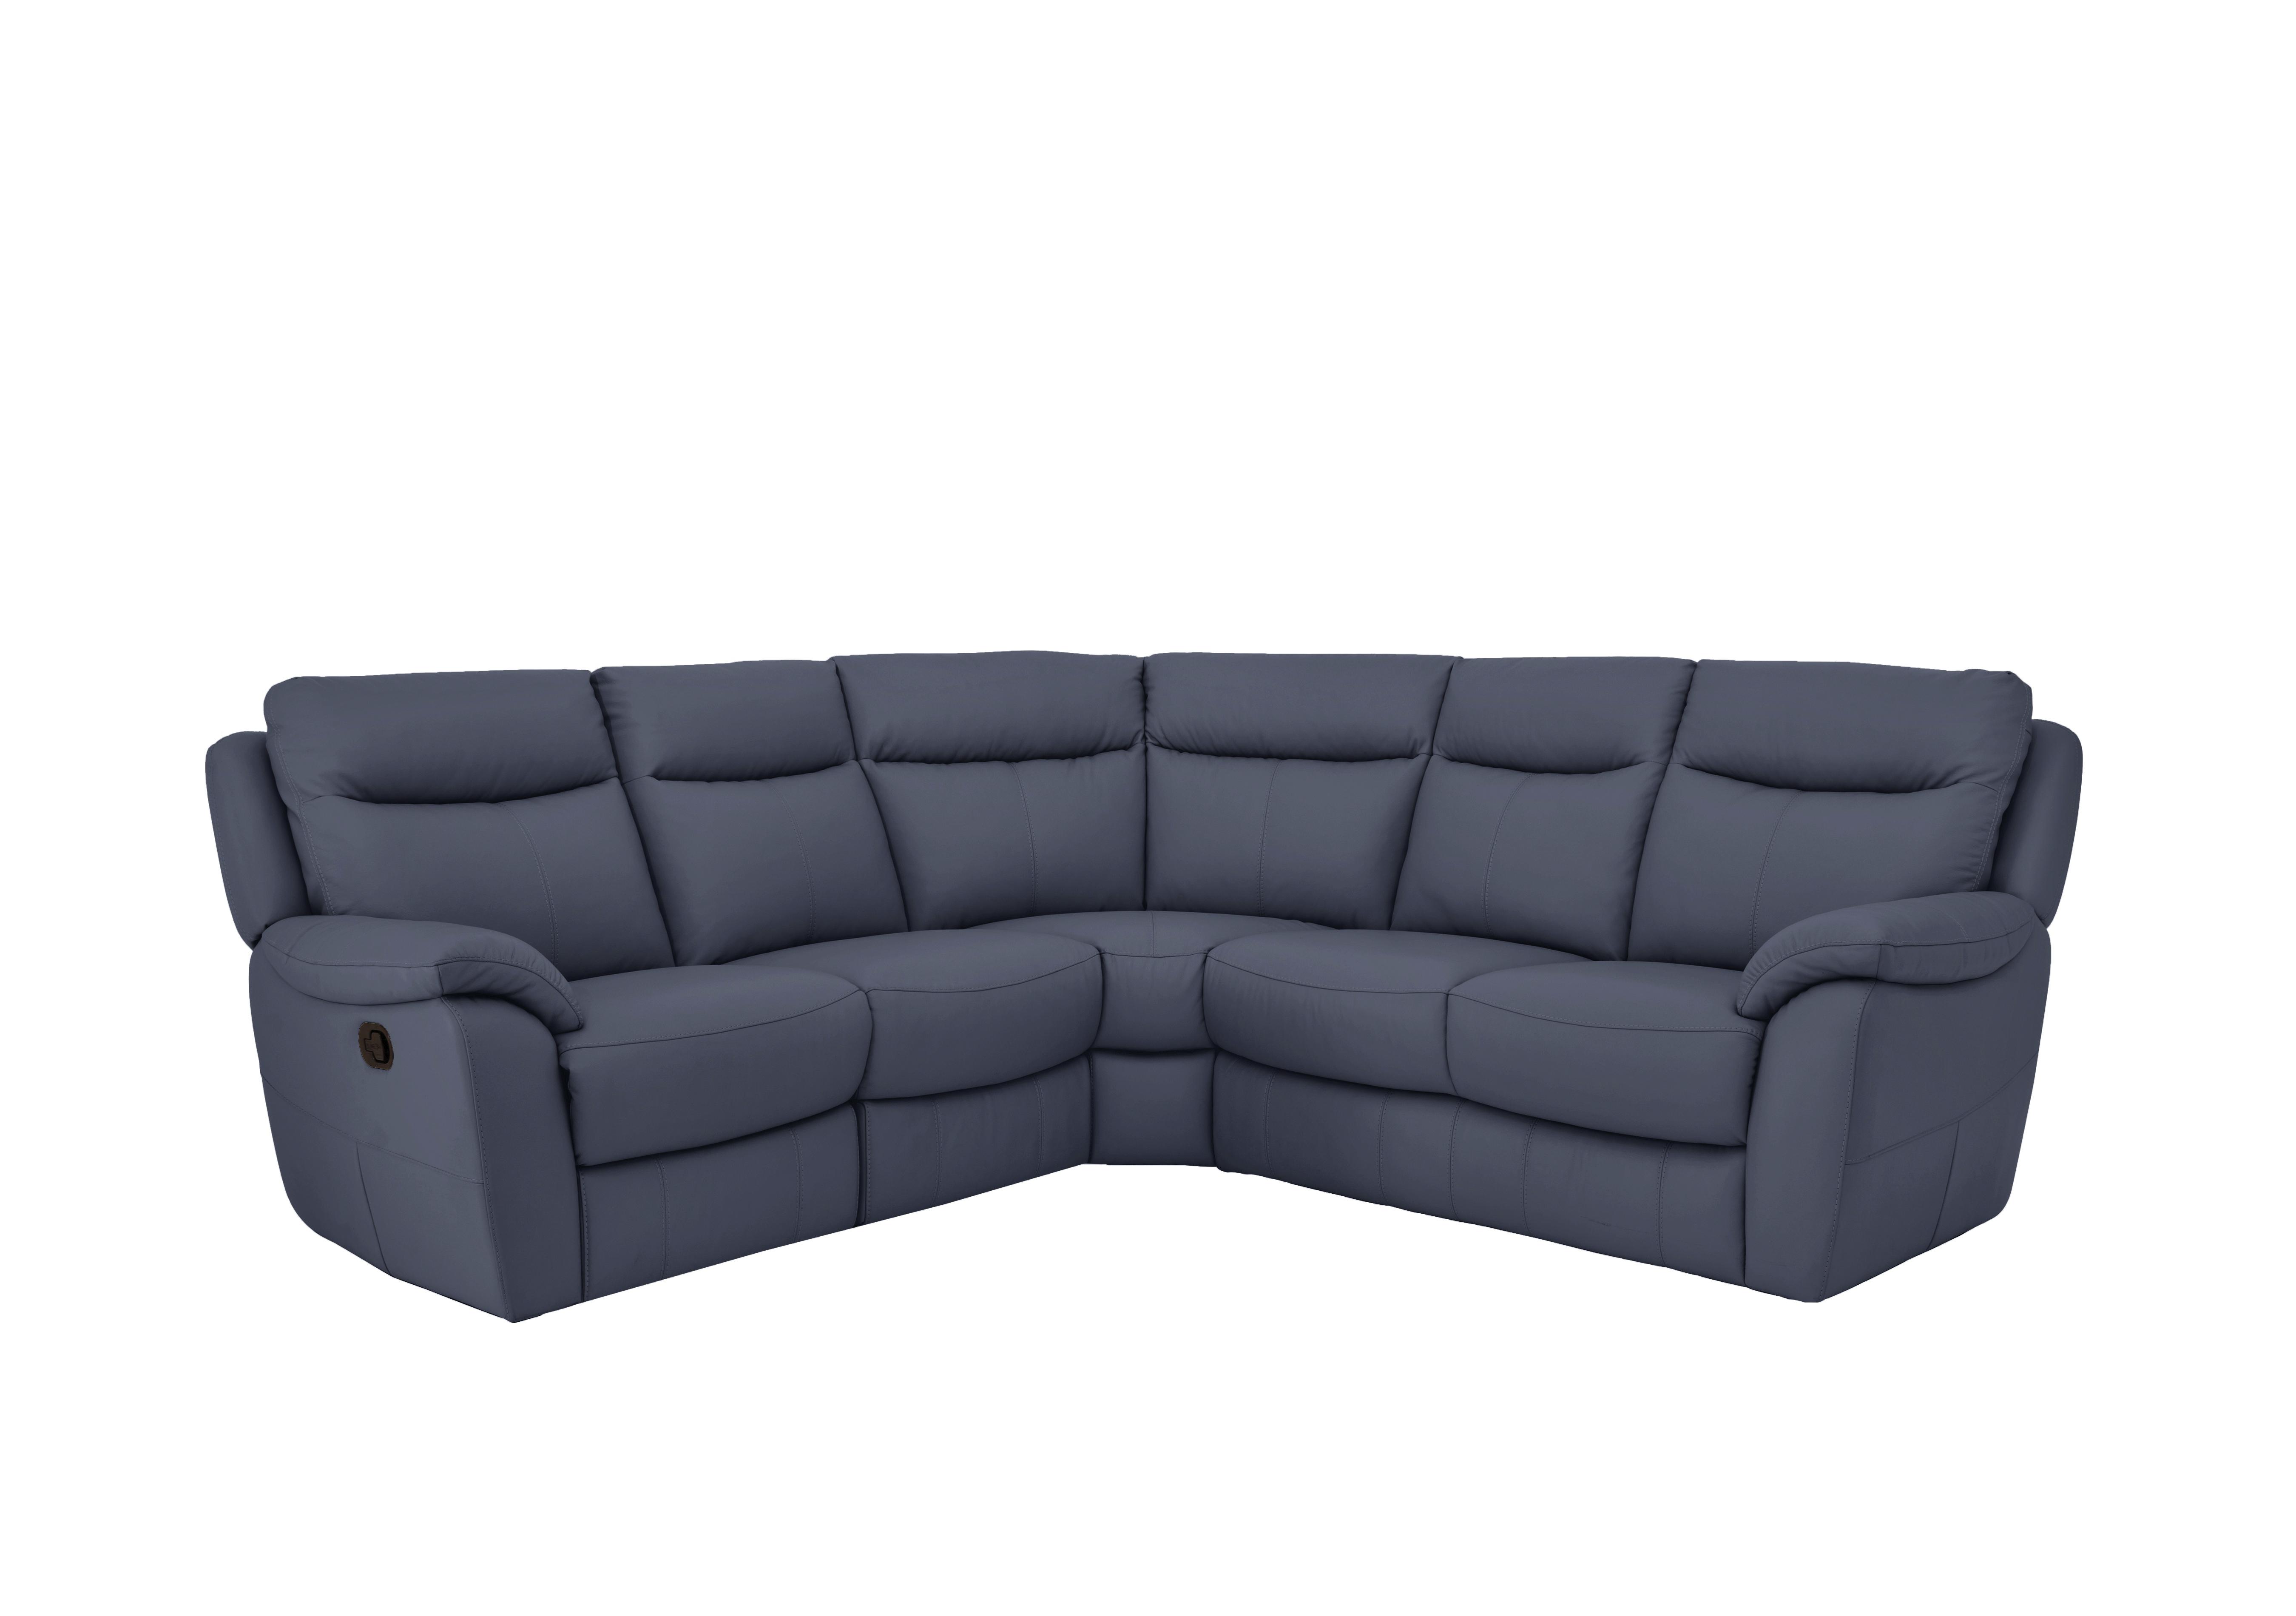 Snug Leather Corner Sofa in Bv-313e Ocean Blue on Furniture Village